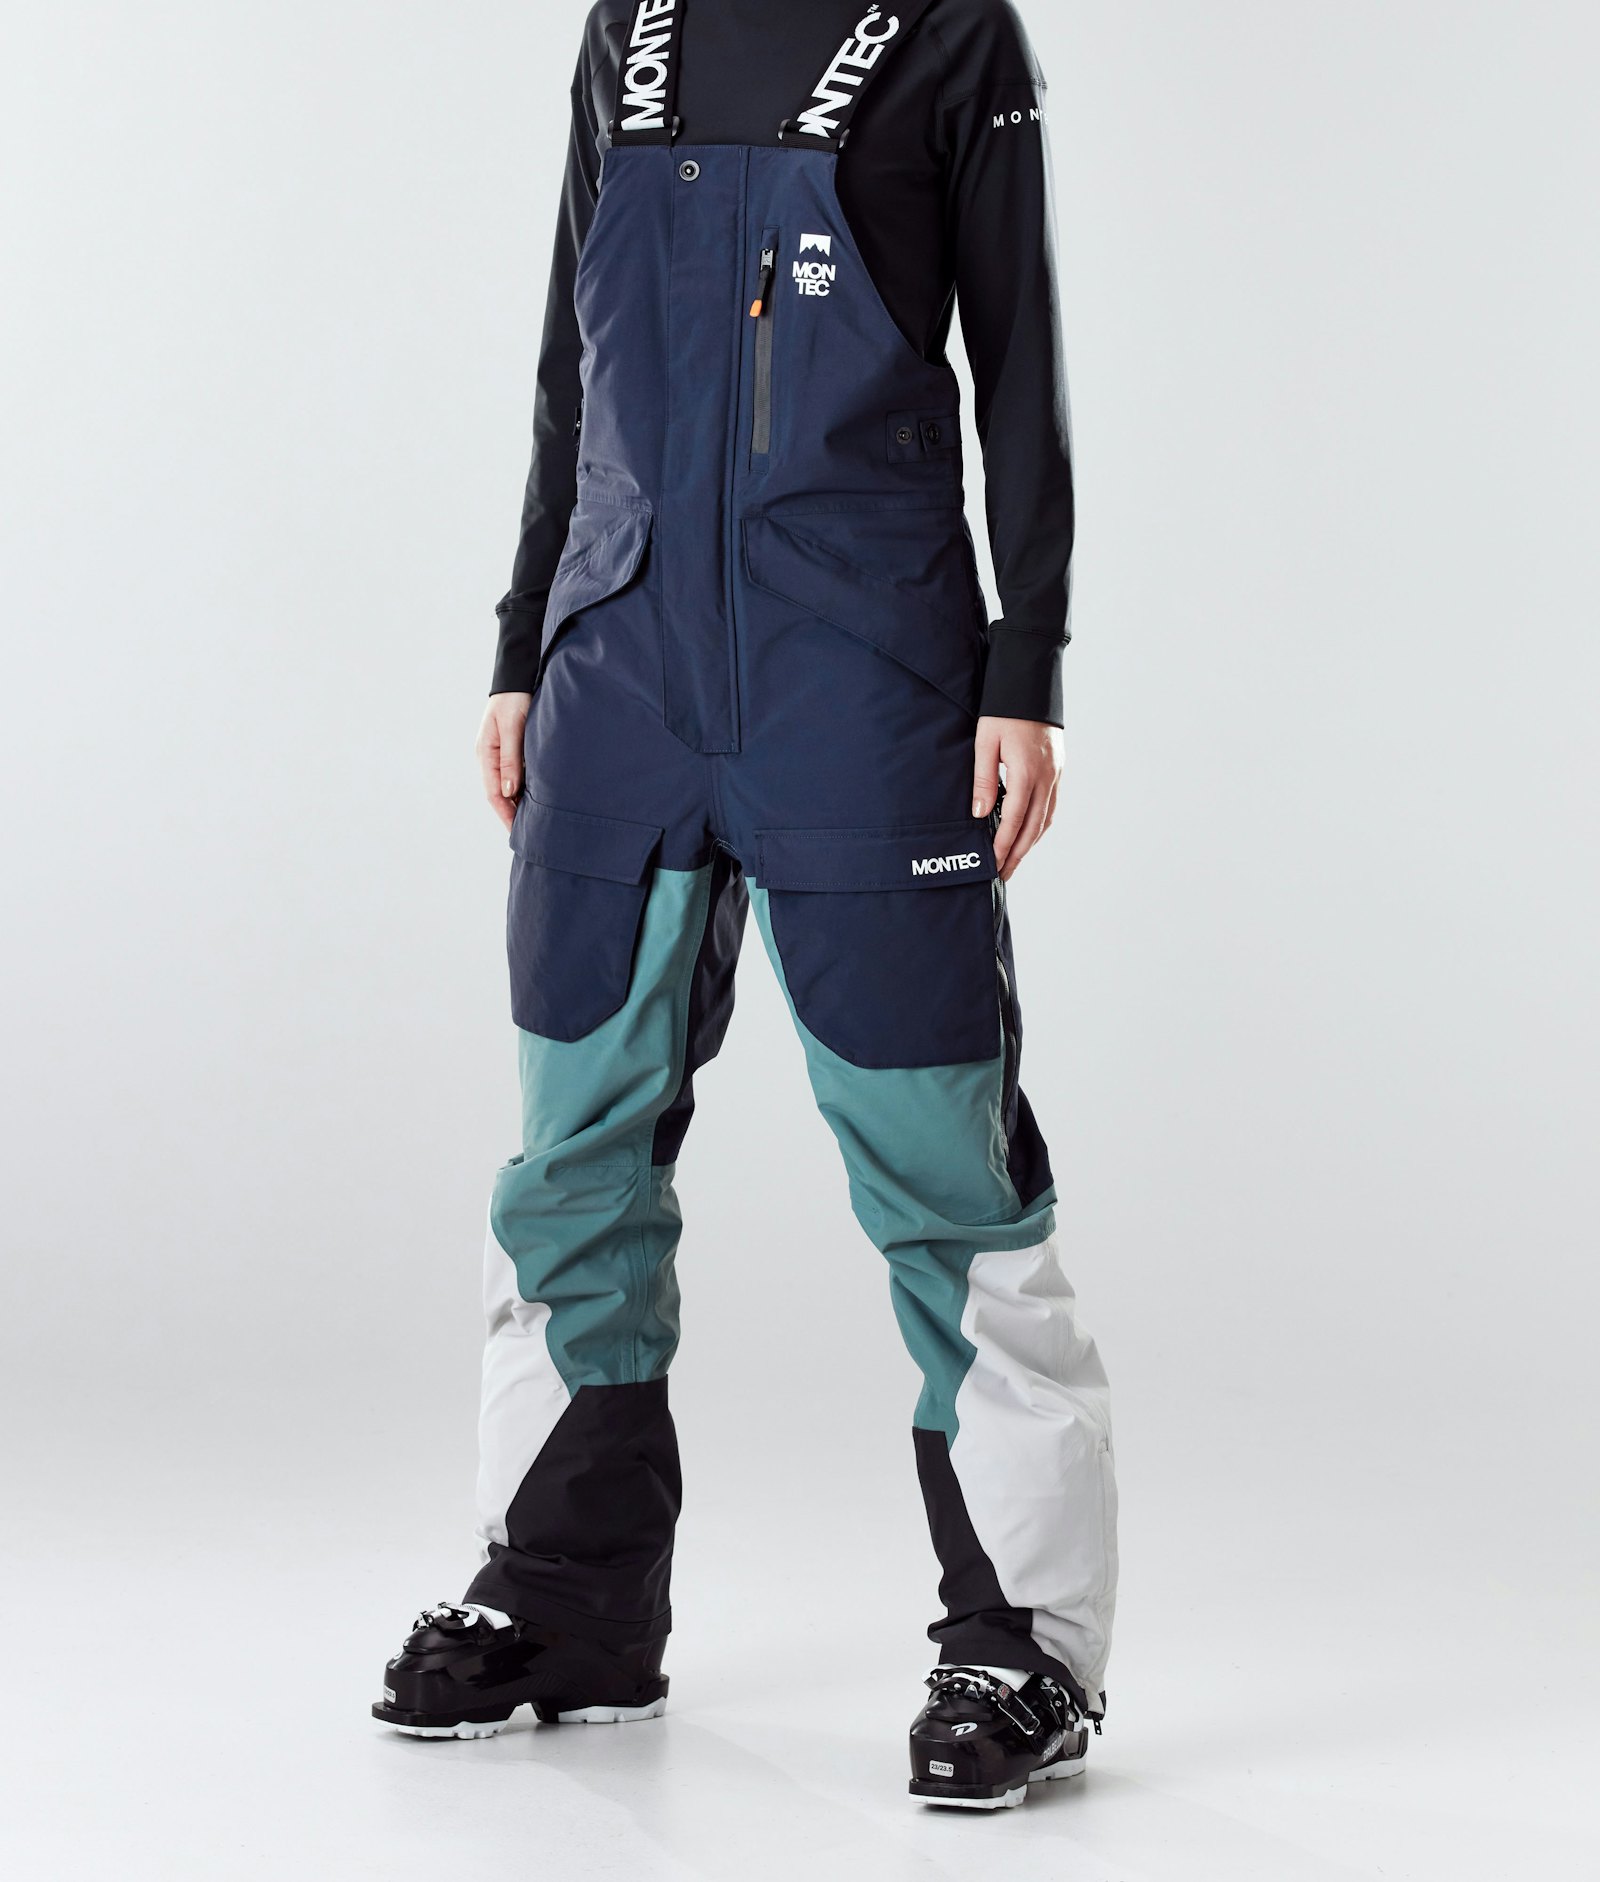 Fawk W 2020 Ski Pants Women Marine/Atlantic/Light Grey